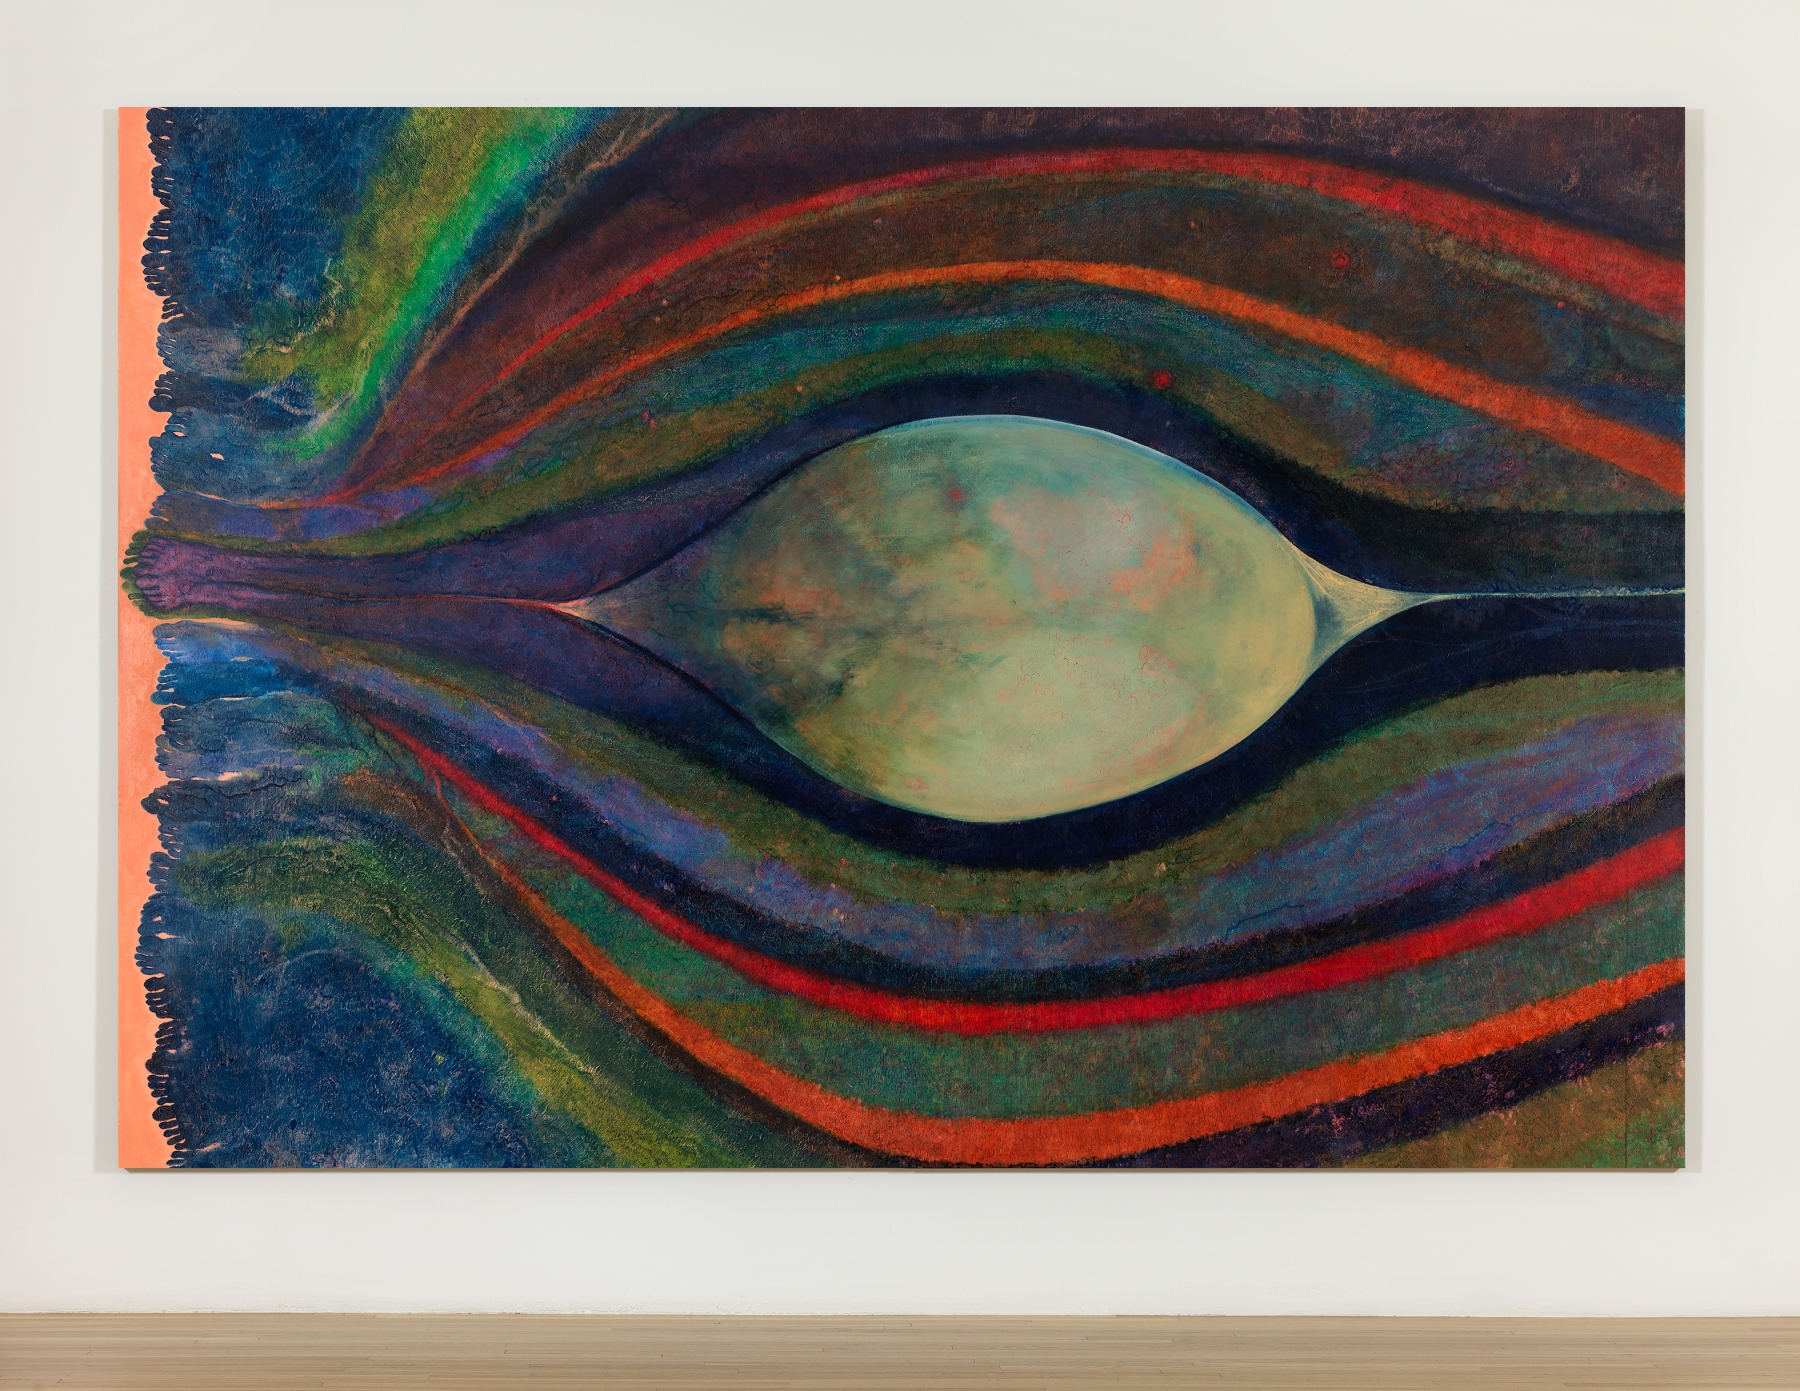 Luisa Rabbia
I Am Rainbow, 2020
Oil on canvas
87 x 128 inches (221 x 325 cm)

Inquire